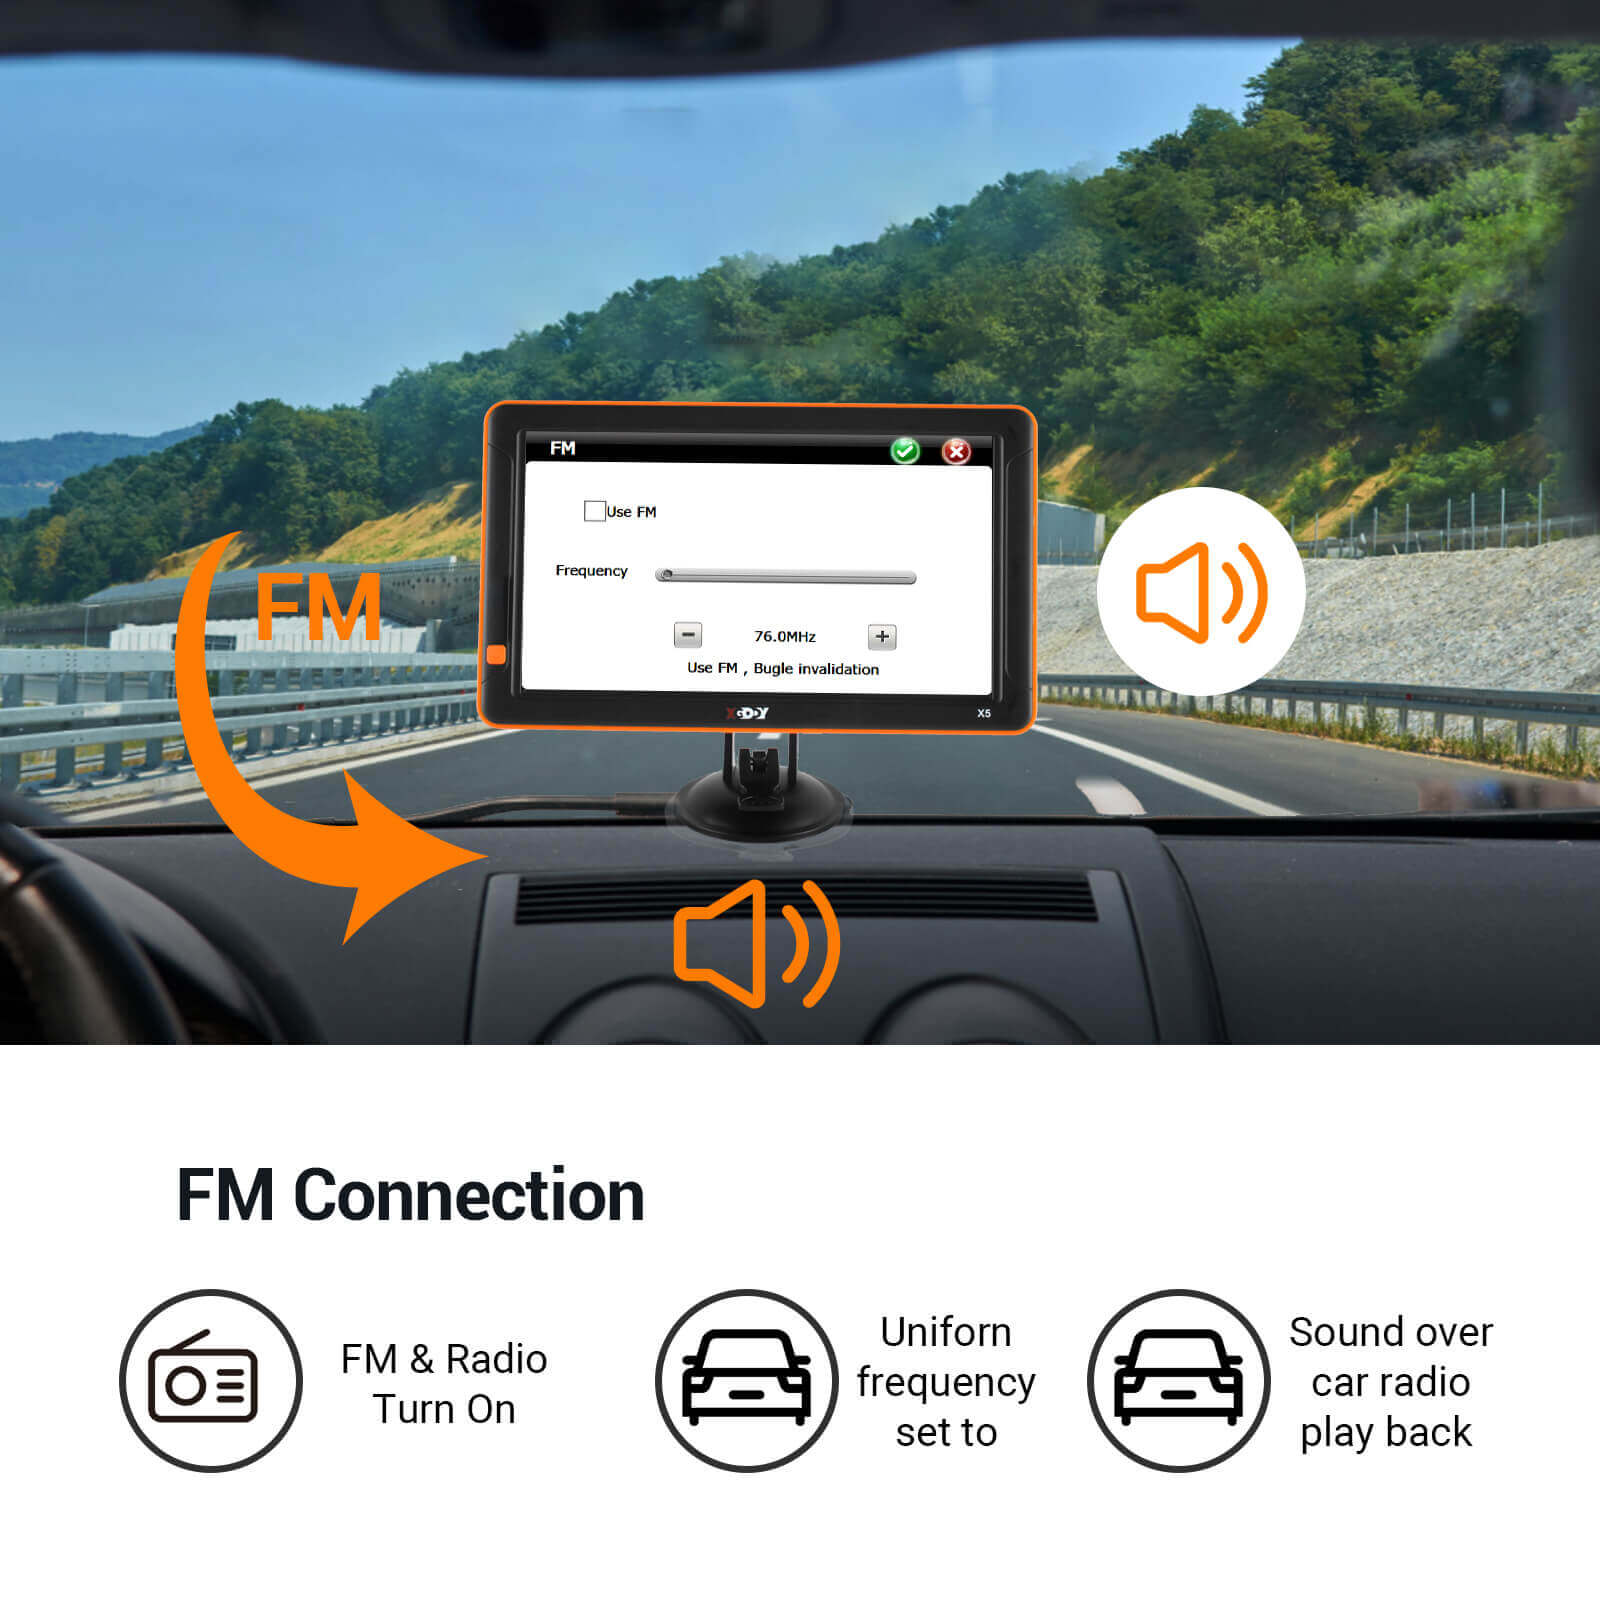 XGODY X5 BT/F 9'' GPS Navigation Bluetooth Camera